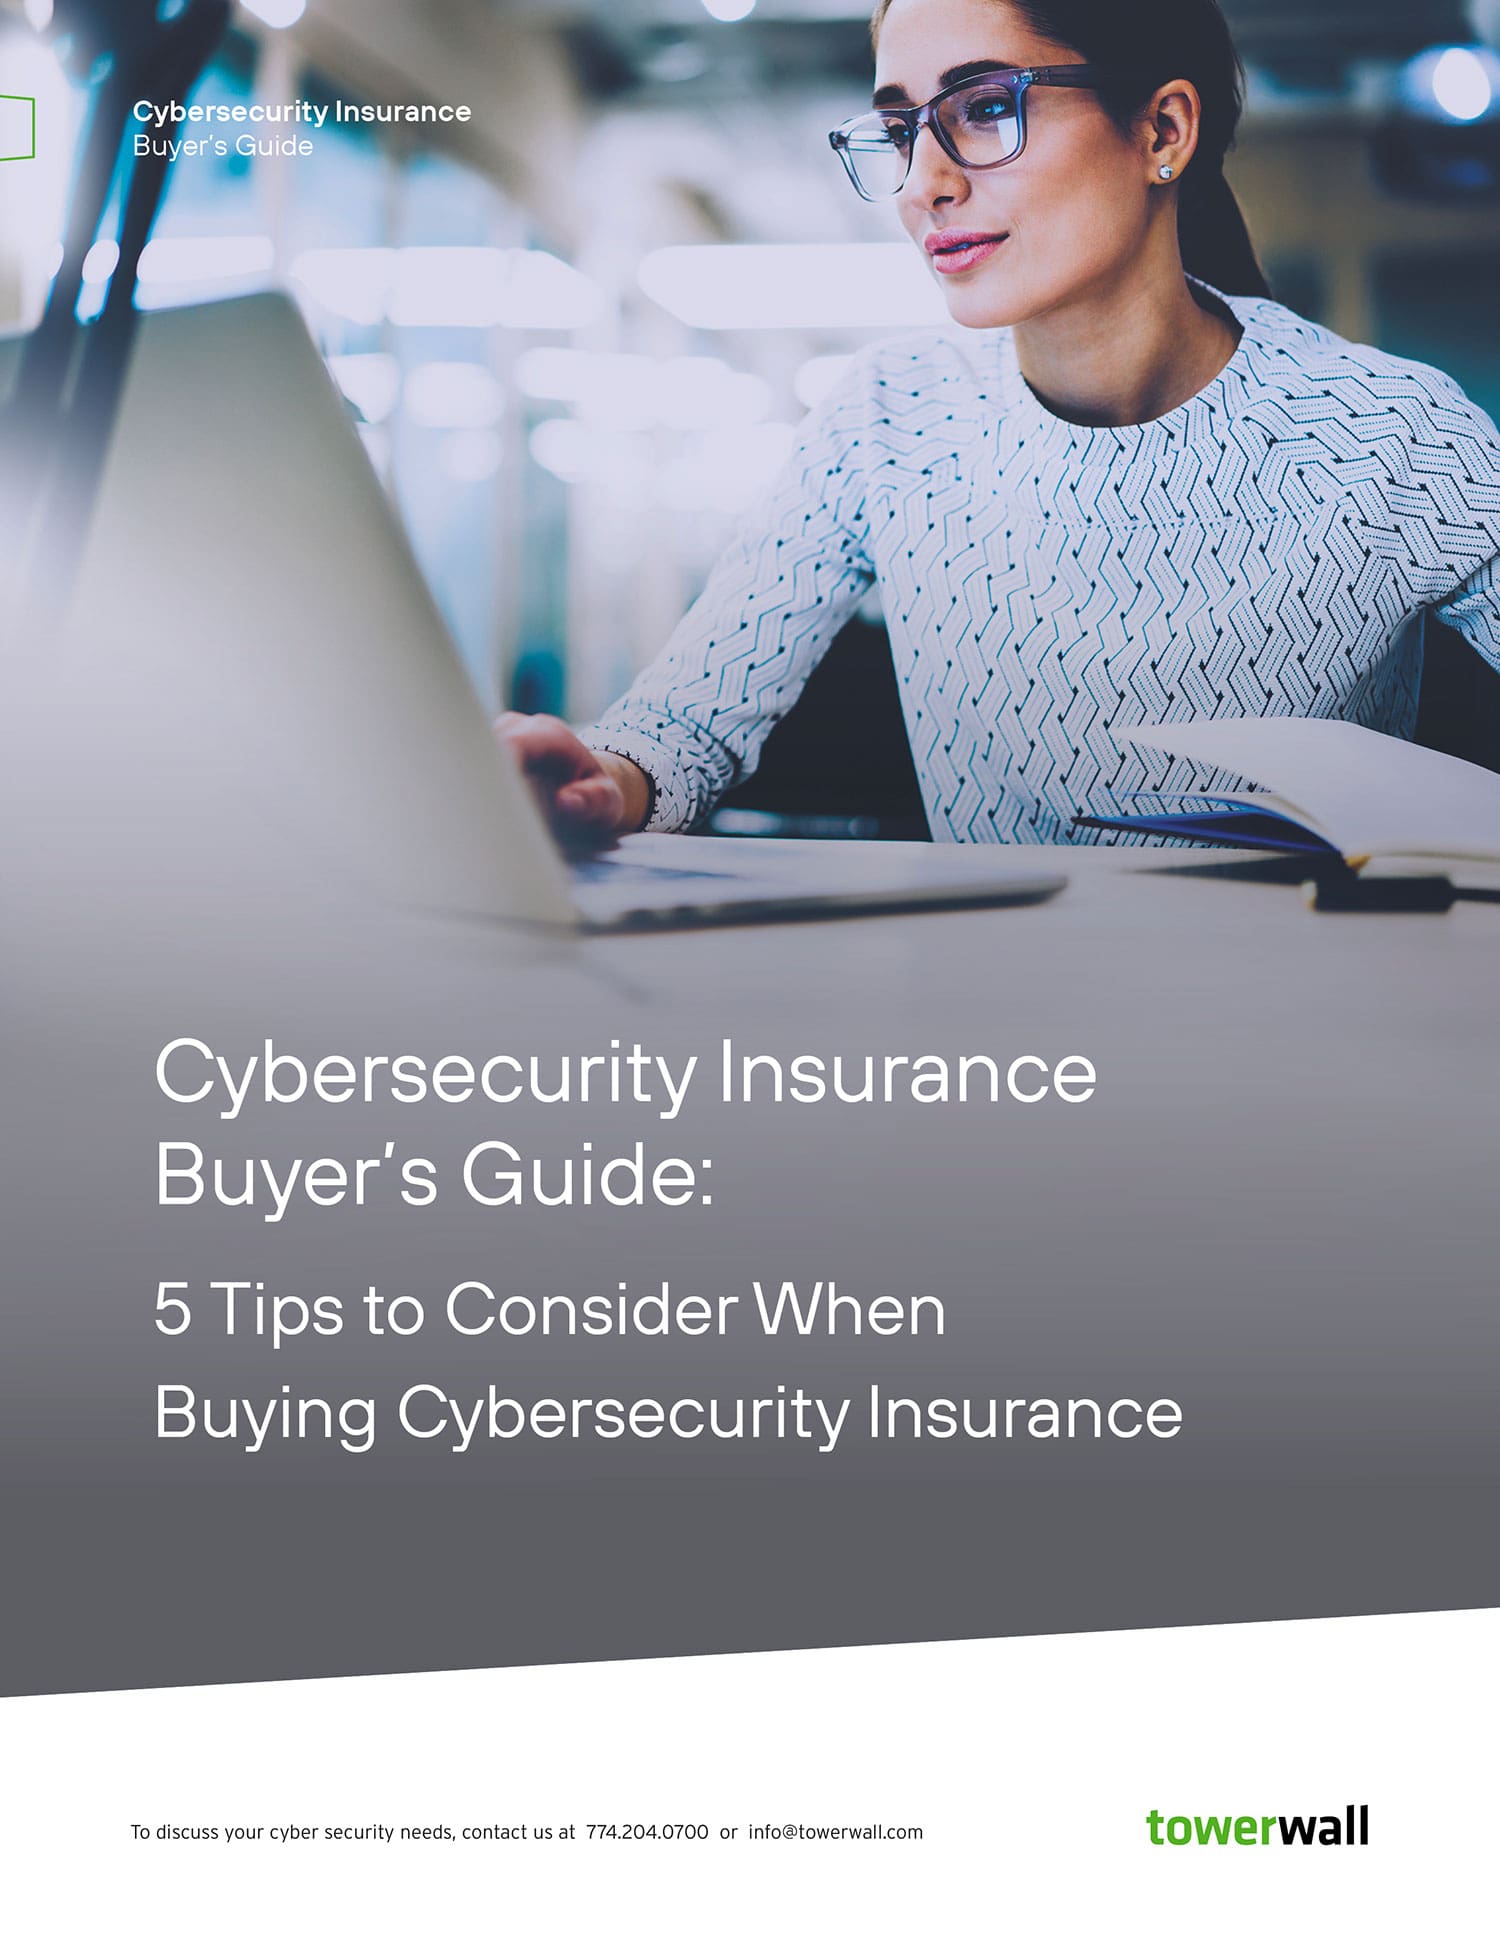 Towerwall CybersecurityInsurance BuyersGuide thumb